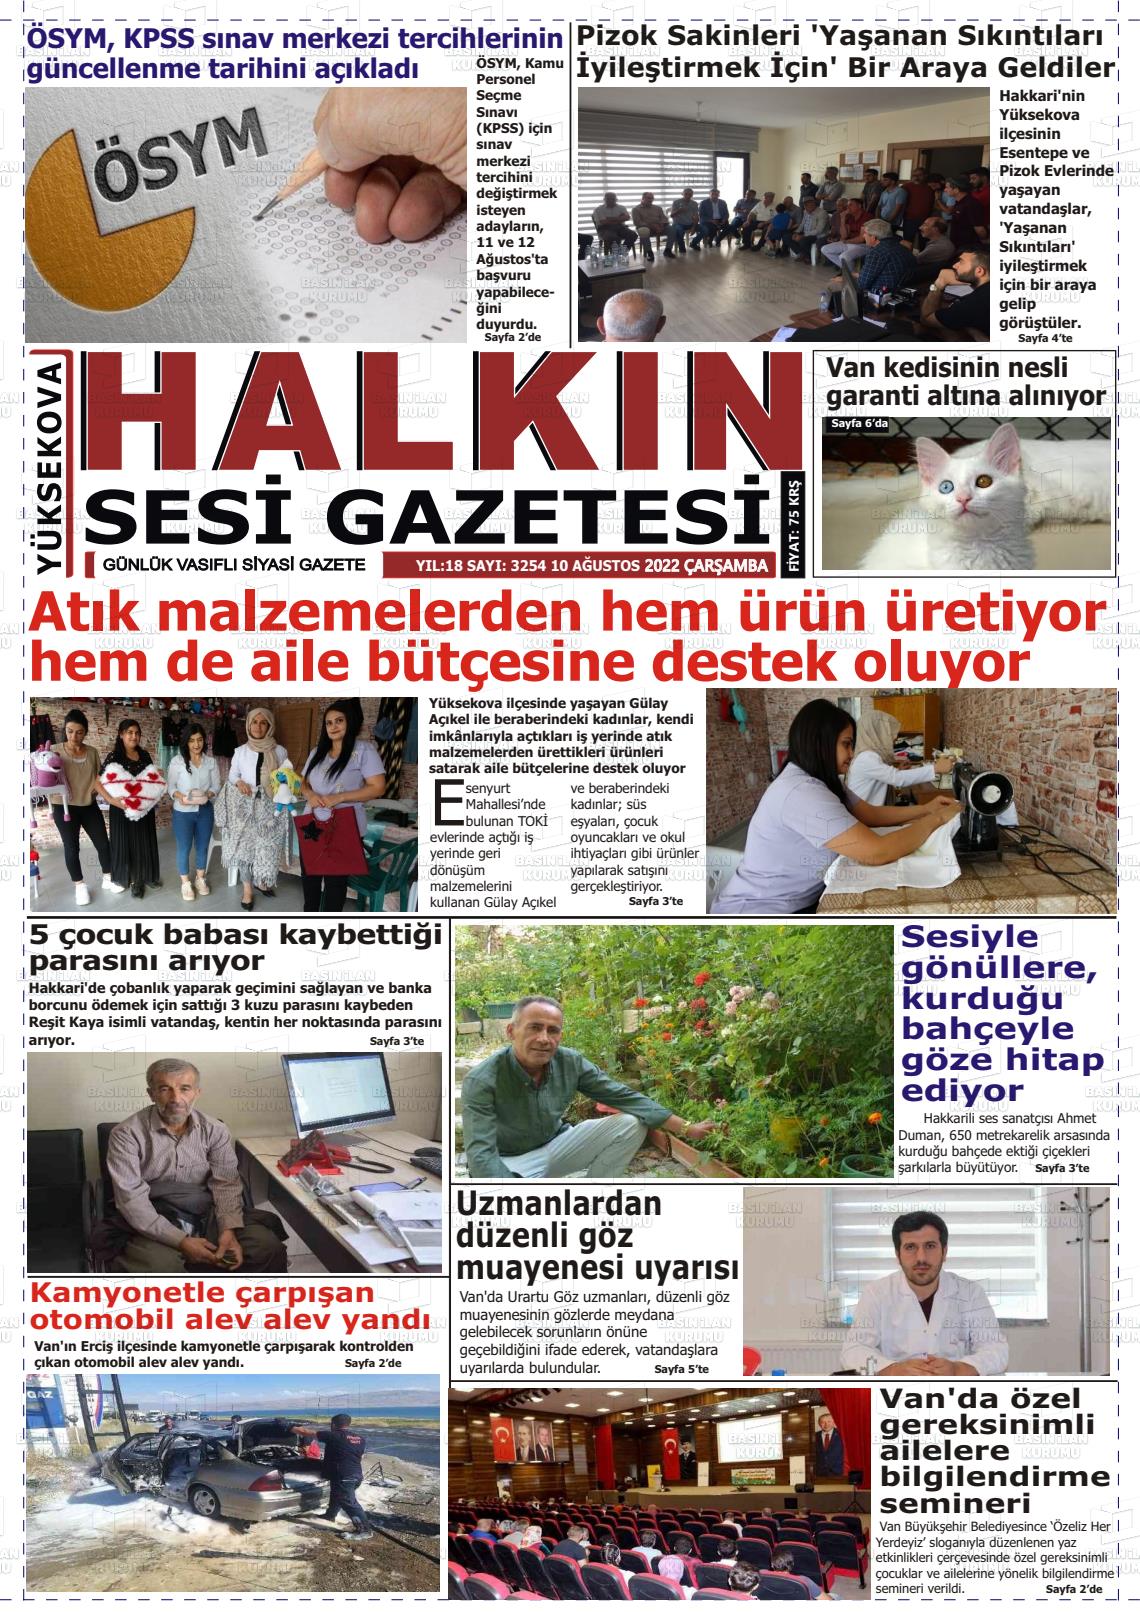 10 Ağustos 2022 Yüksekova Halkın Sesi Gazete Manşeti